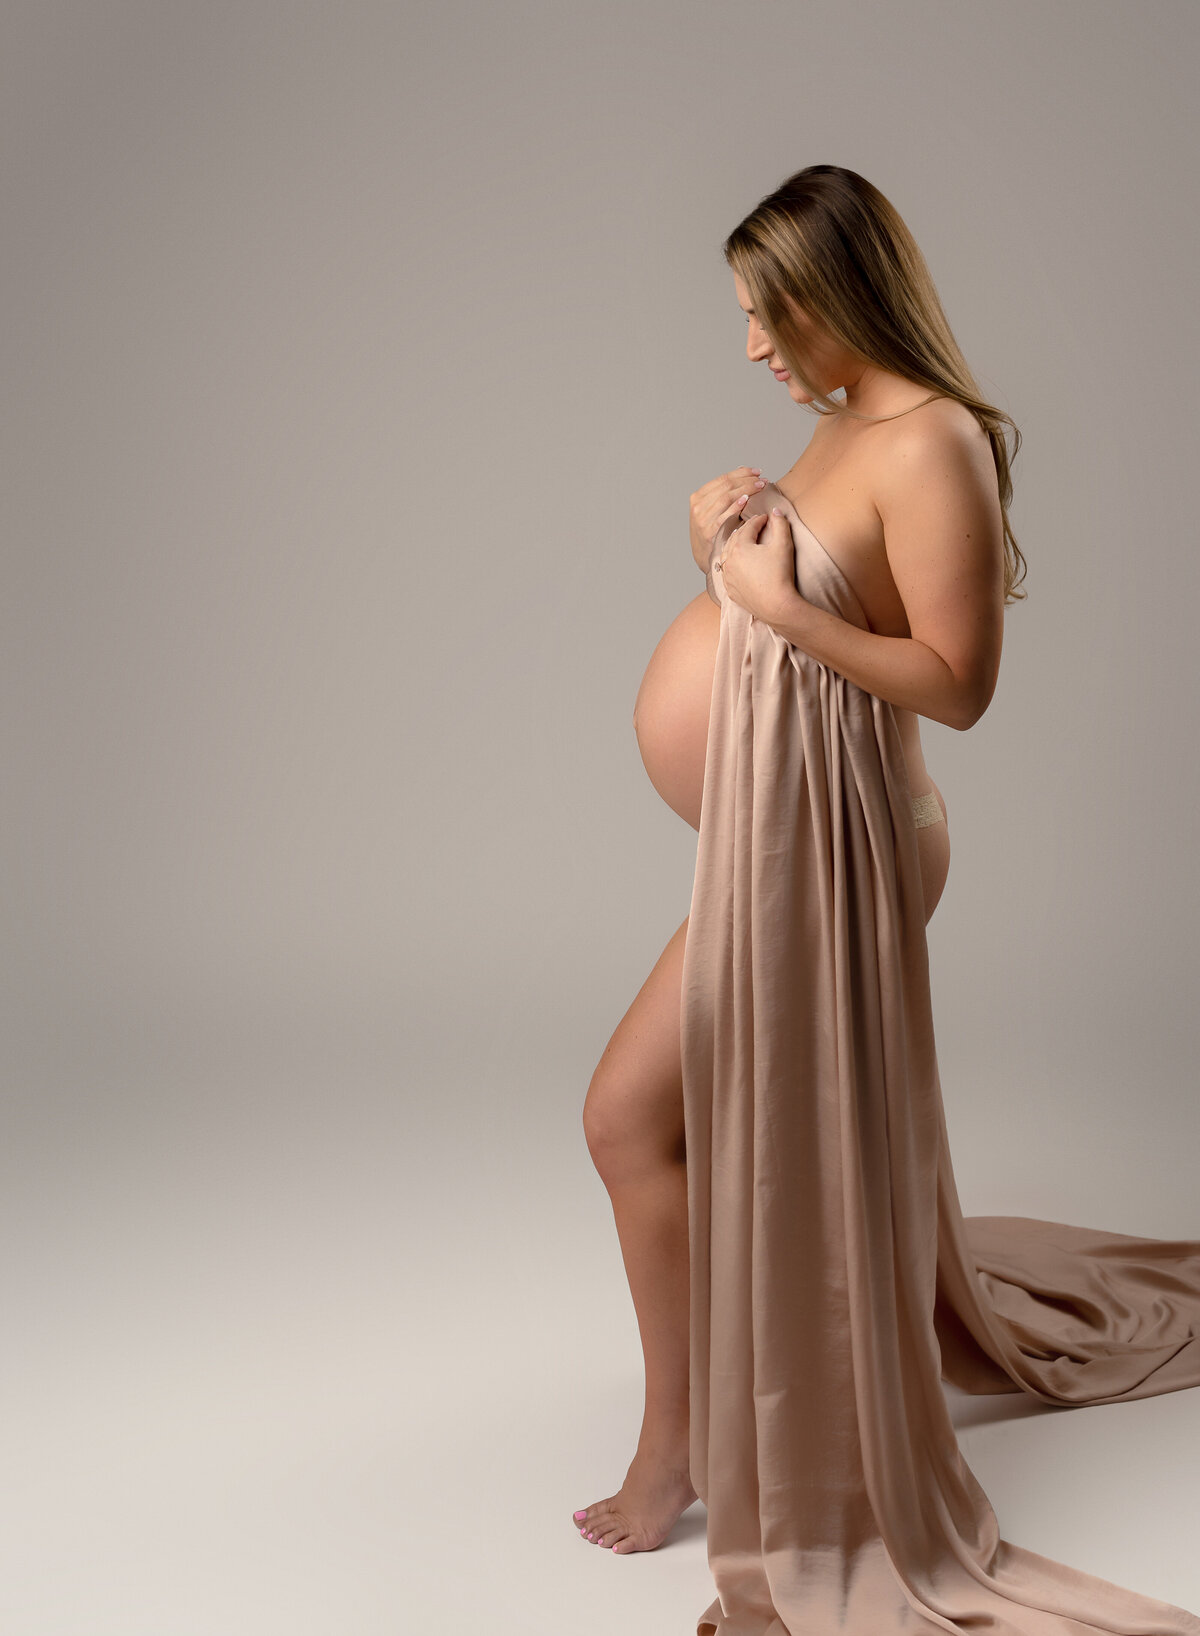 Georgetown-maternity-photographer